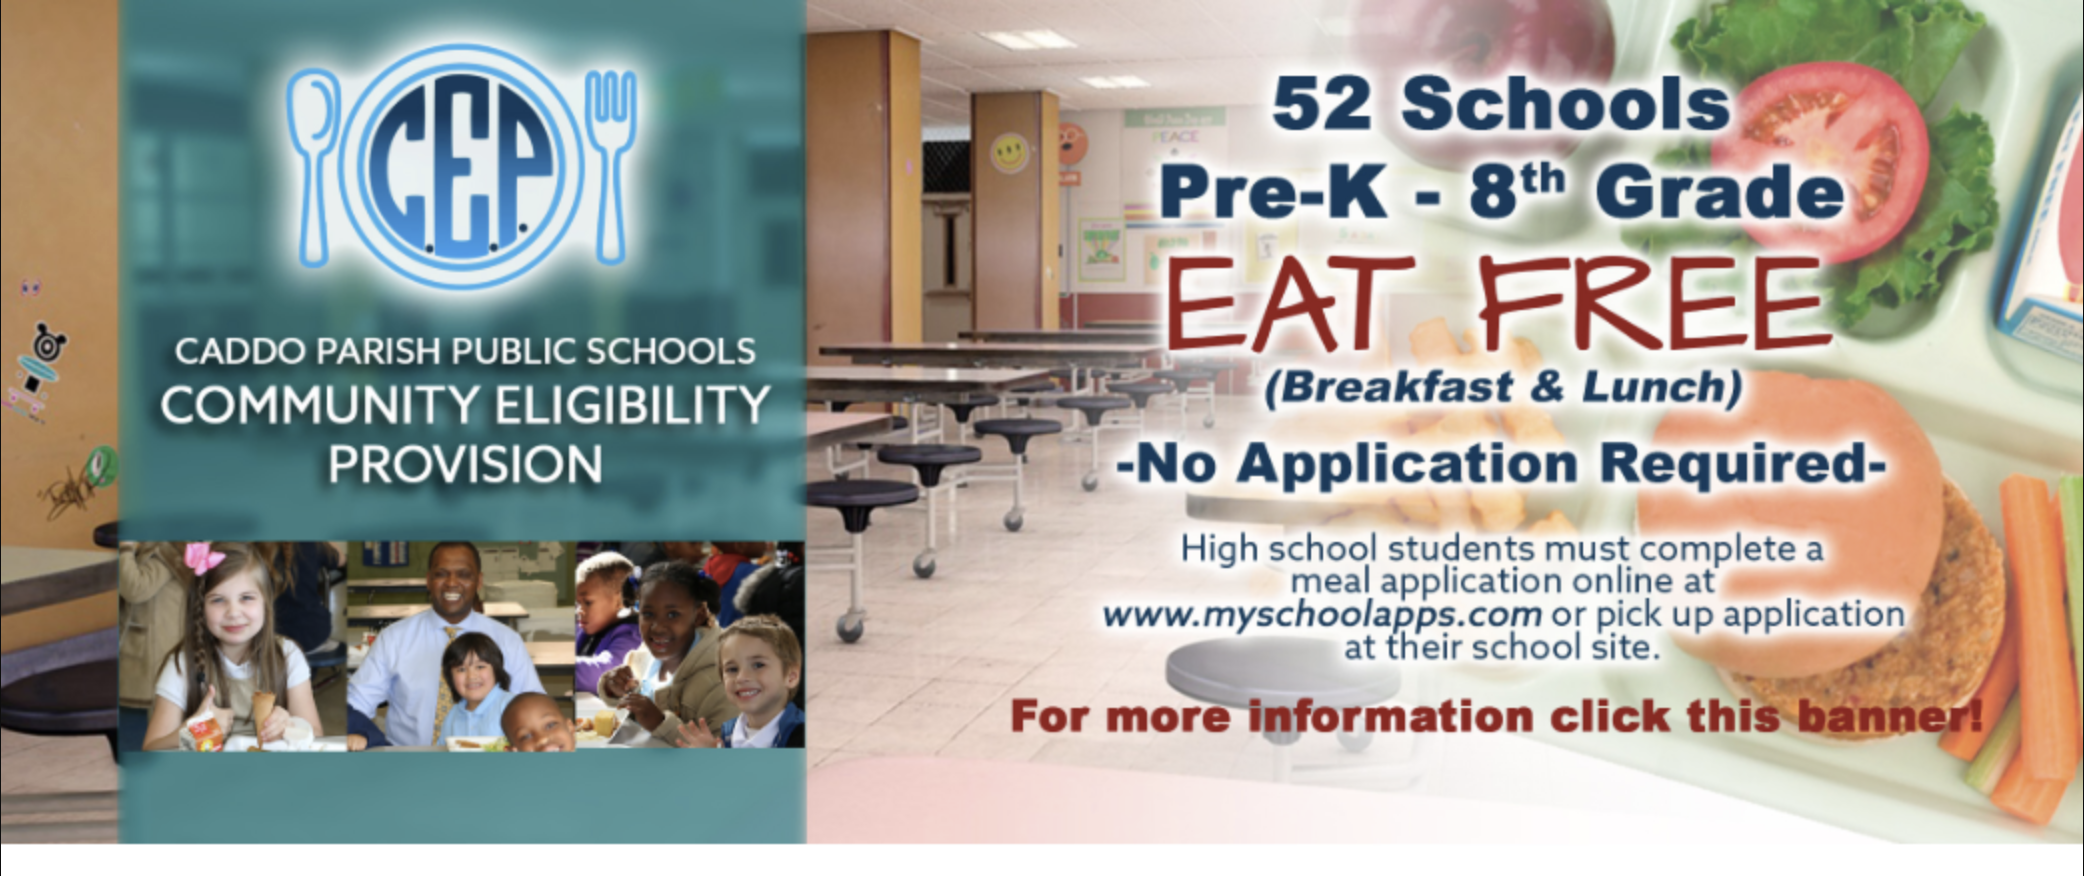 Caddo Parish Public Schools Community Eligibility Provision